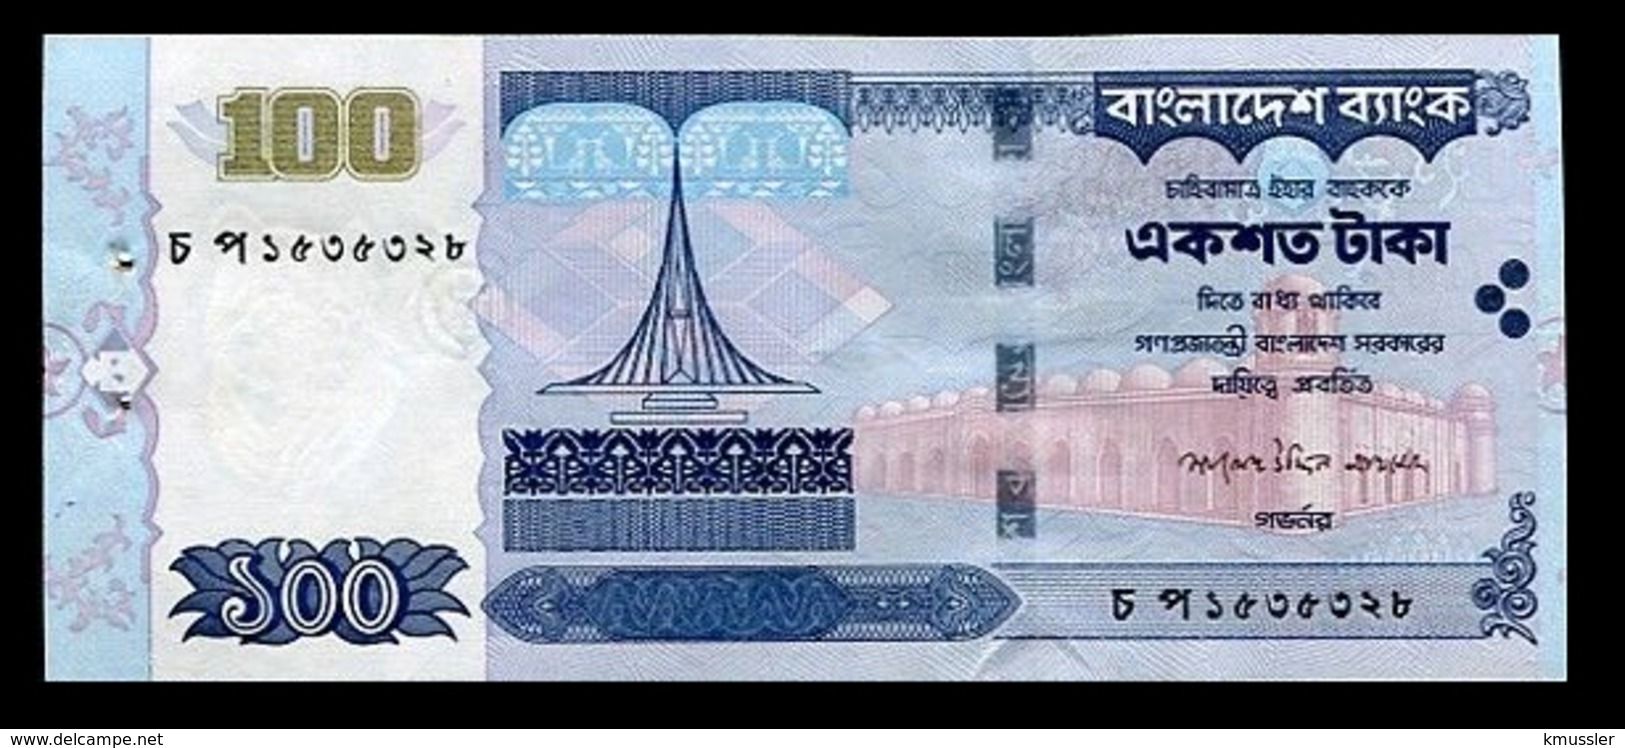 # # # Banknote Bangladesh 100 Taka 2005 UNC # # # - Bangladesch